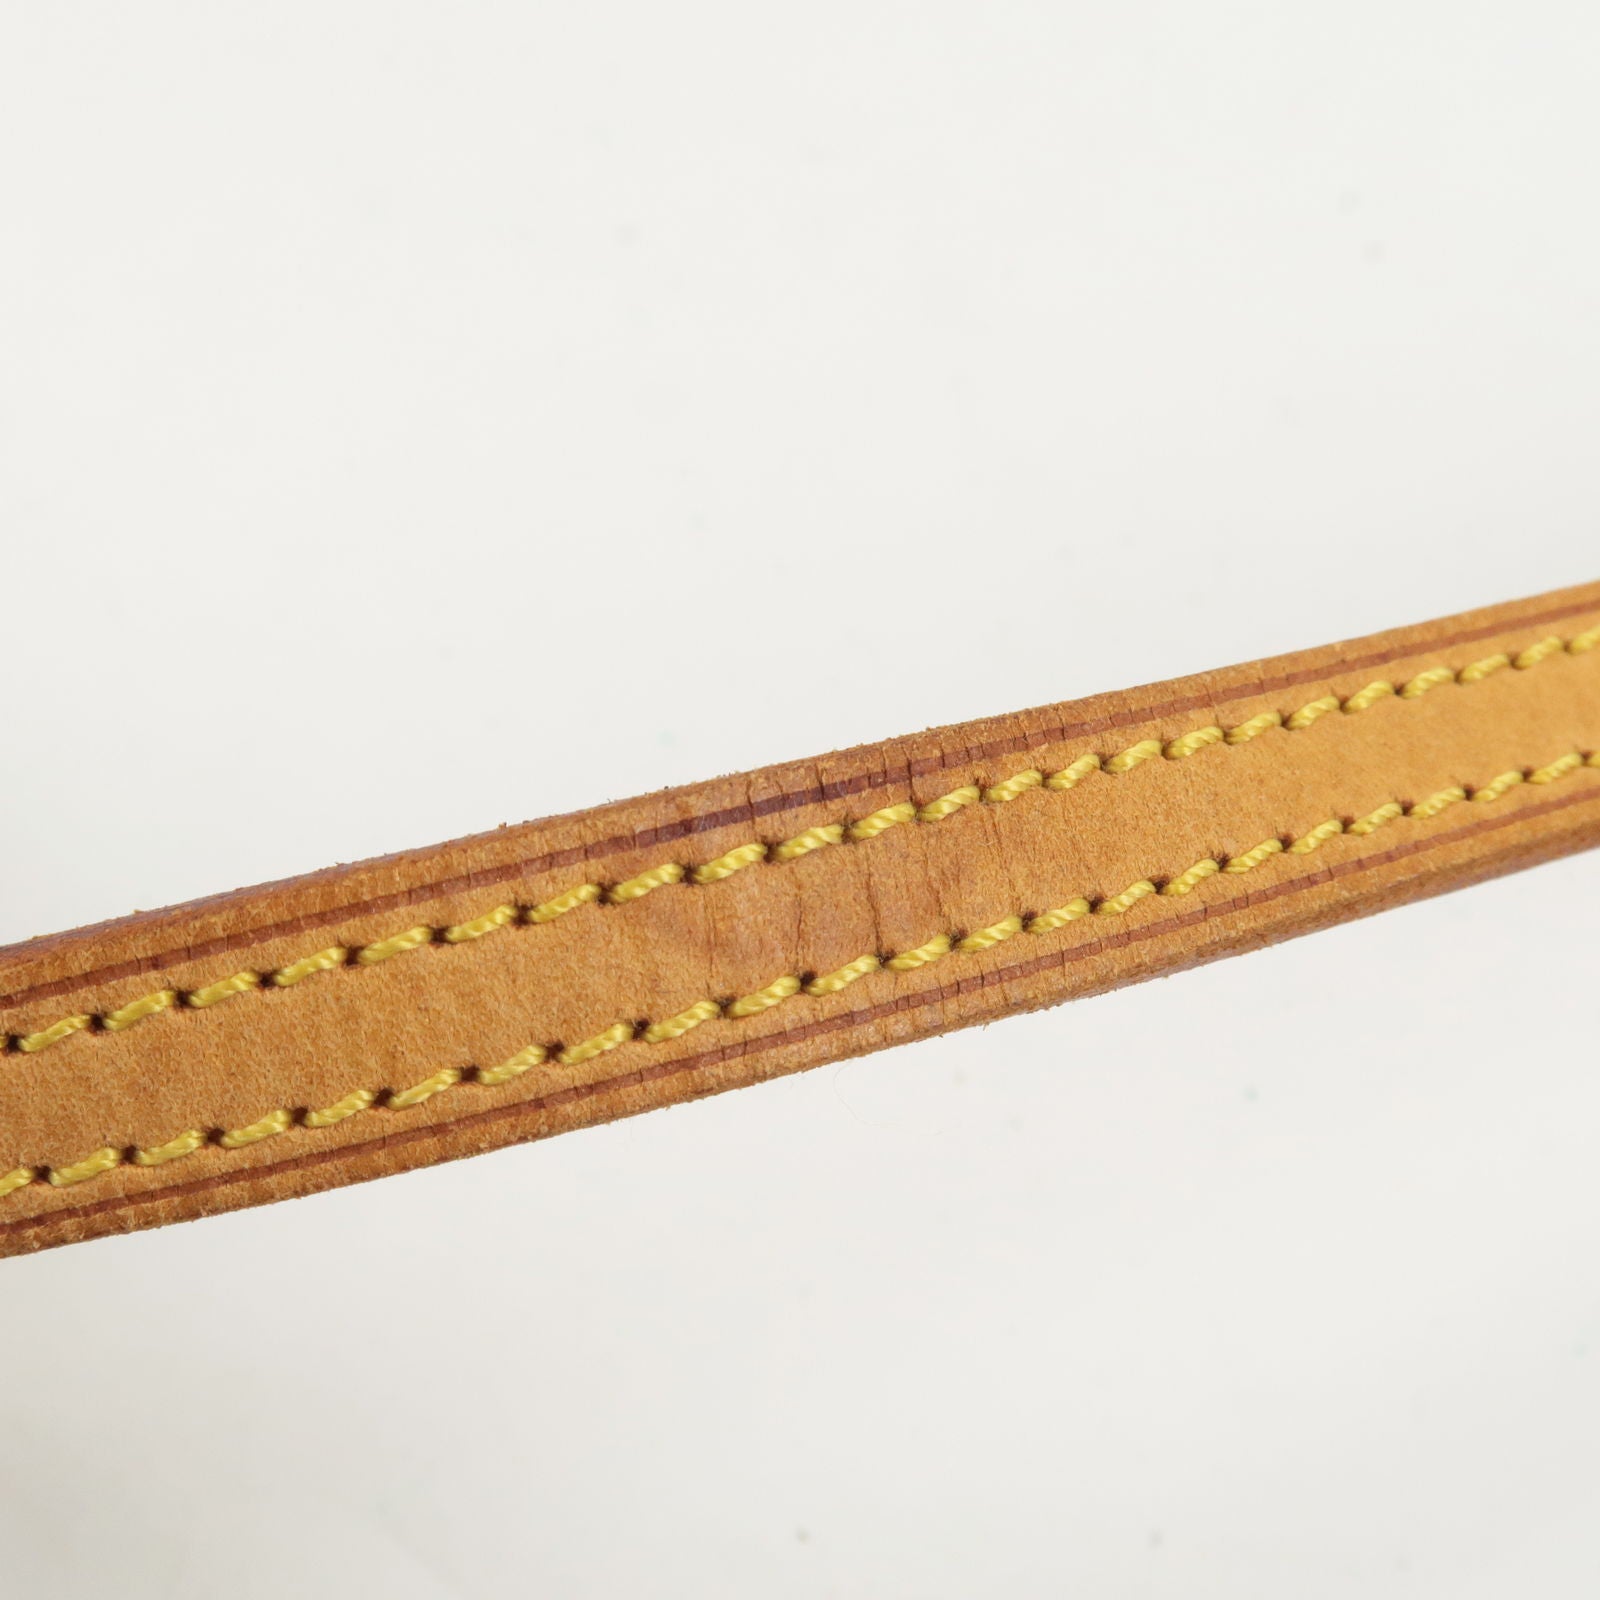 authentic louis vuitton replacement strap